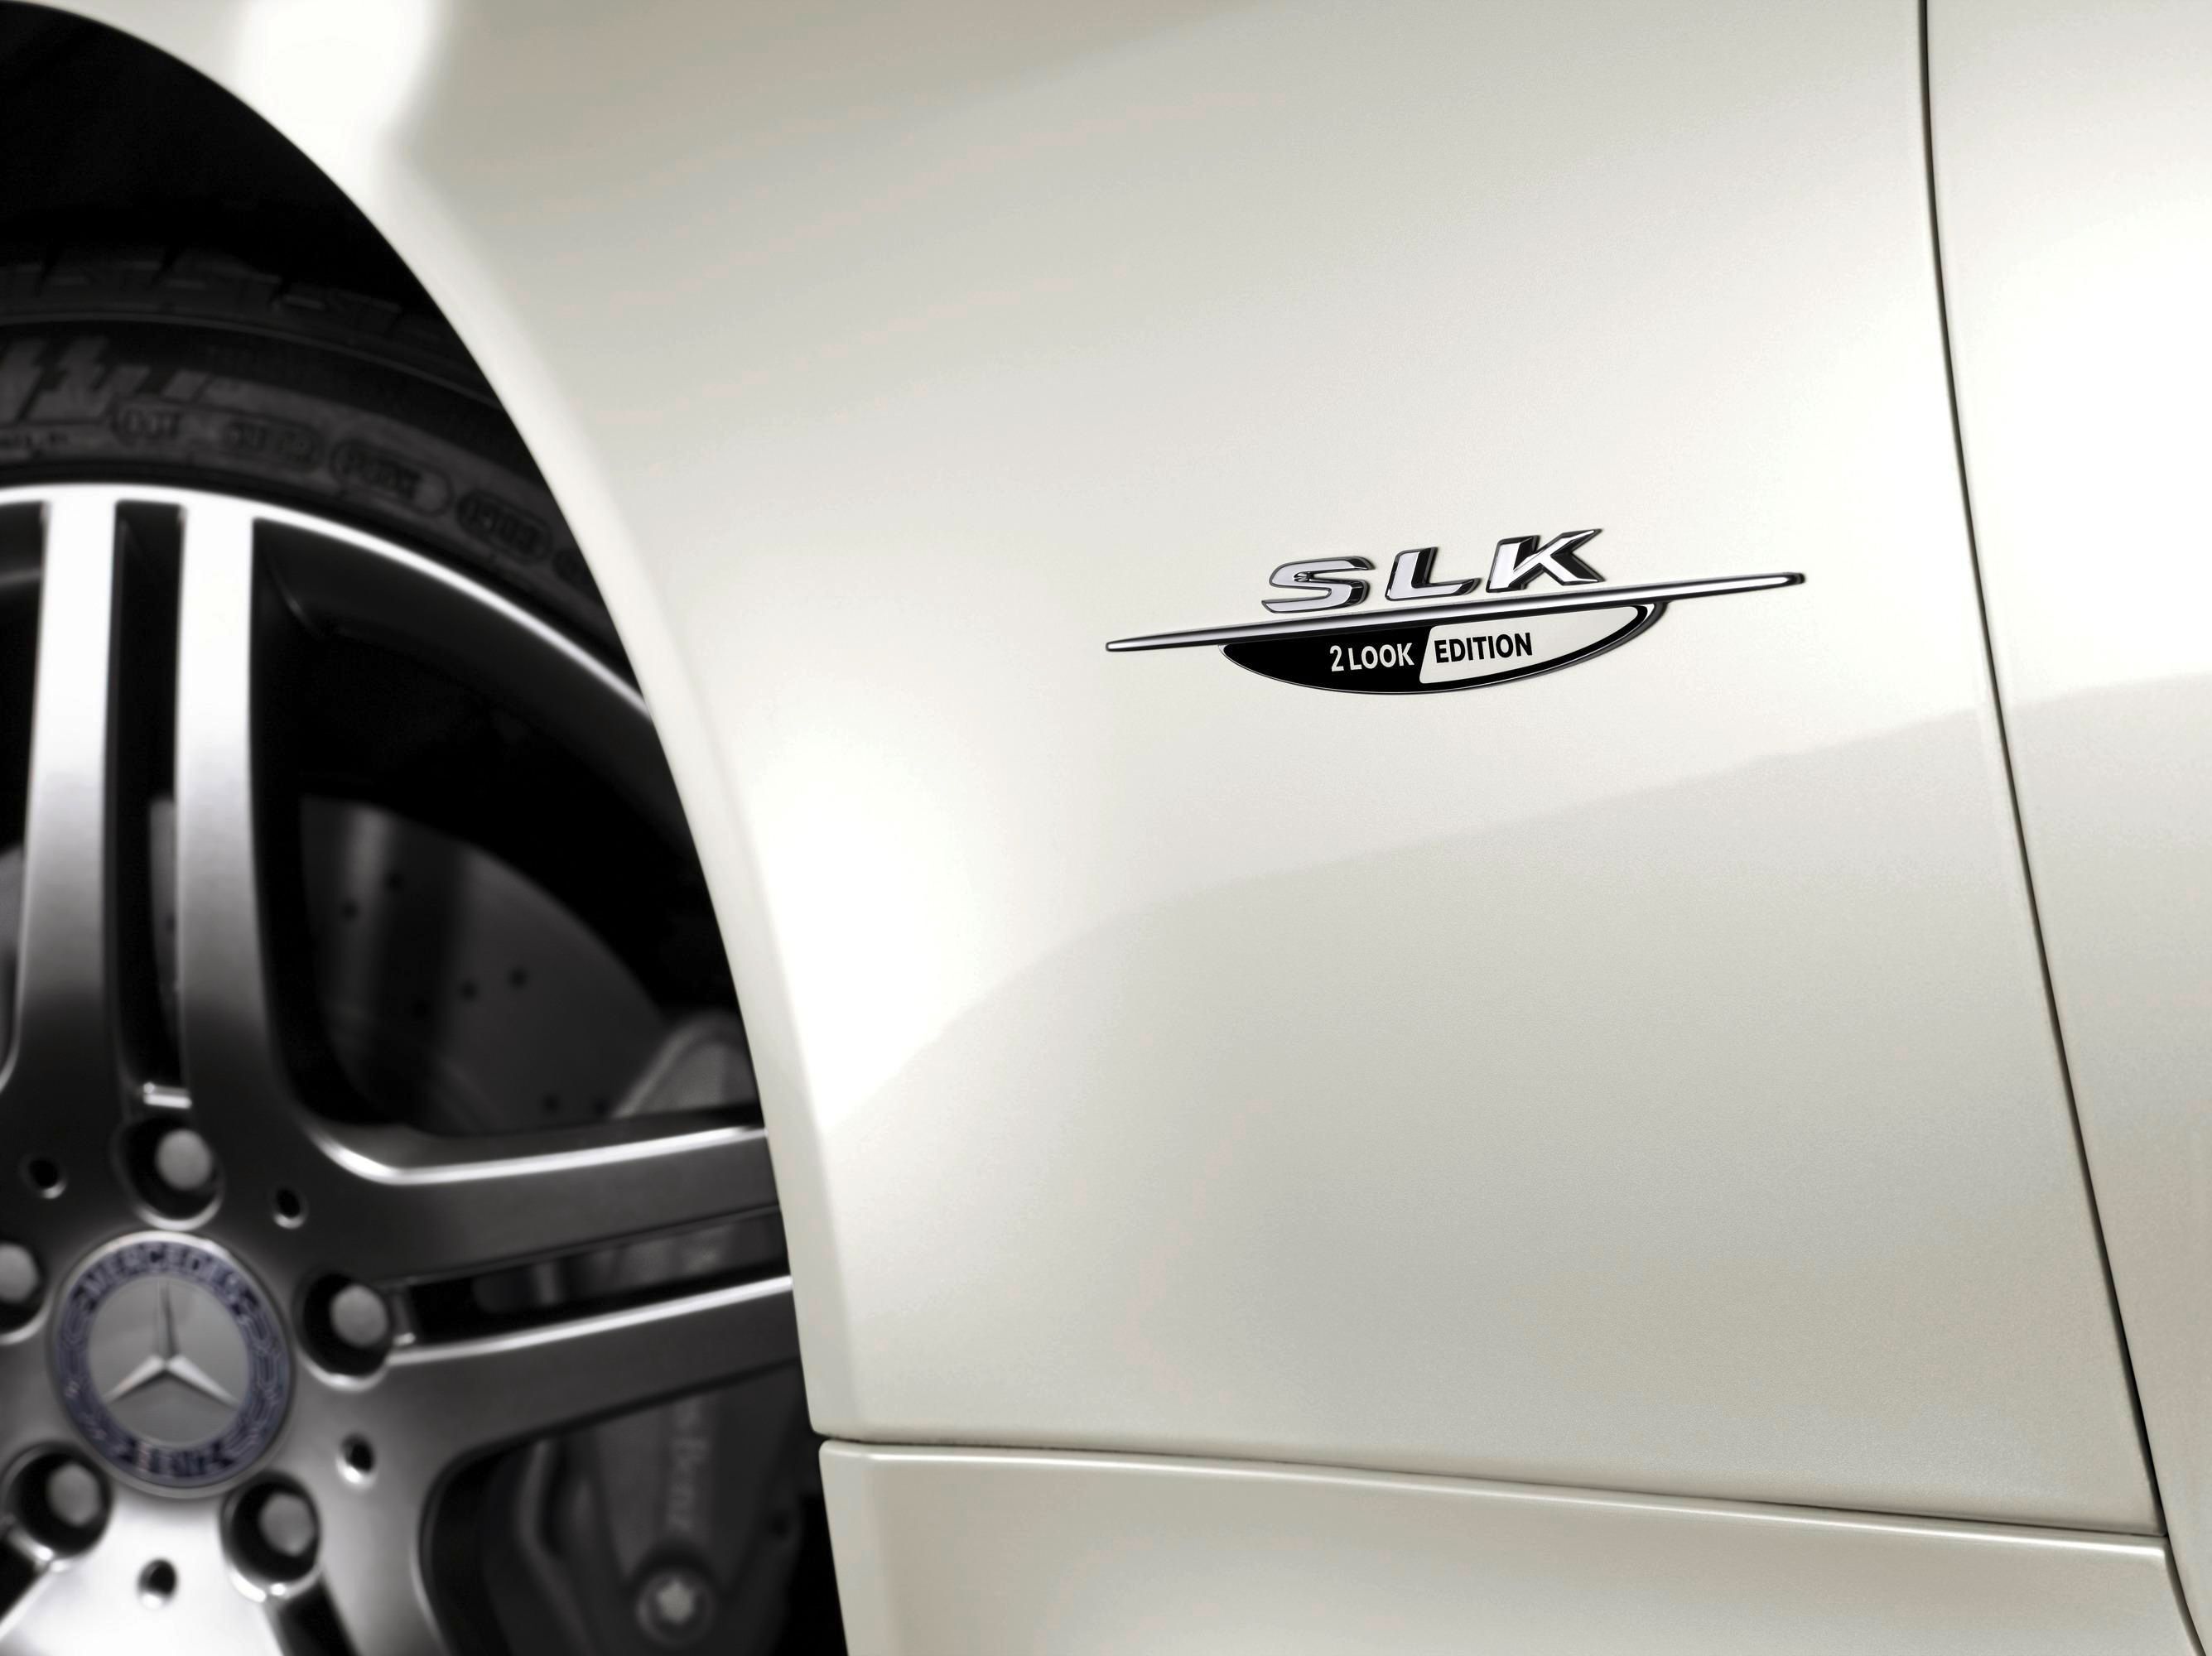 2009 Mercedes SLK 2LOOK Edition